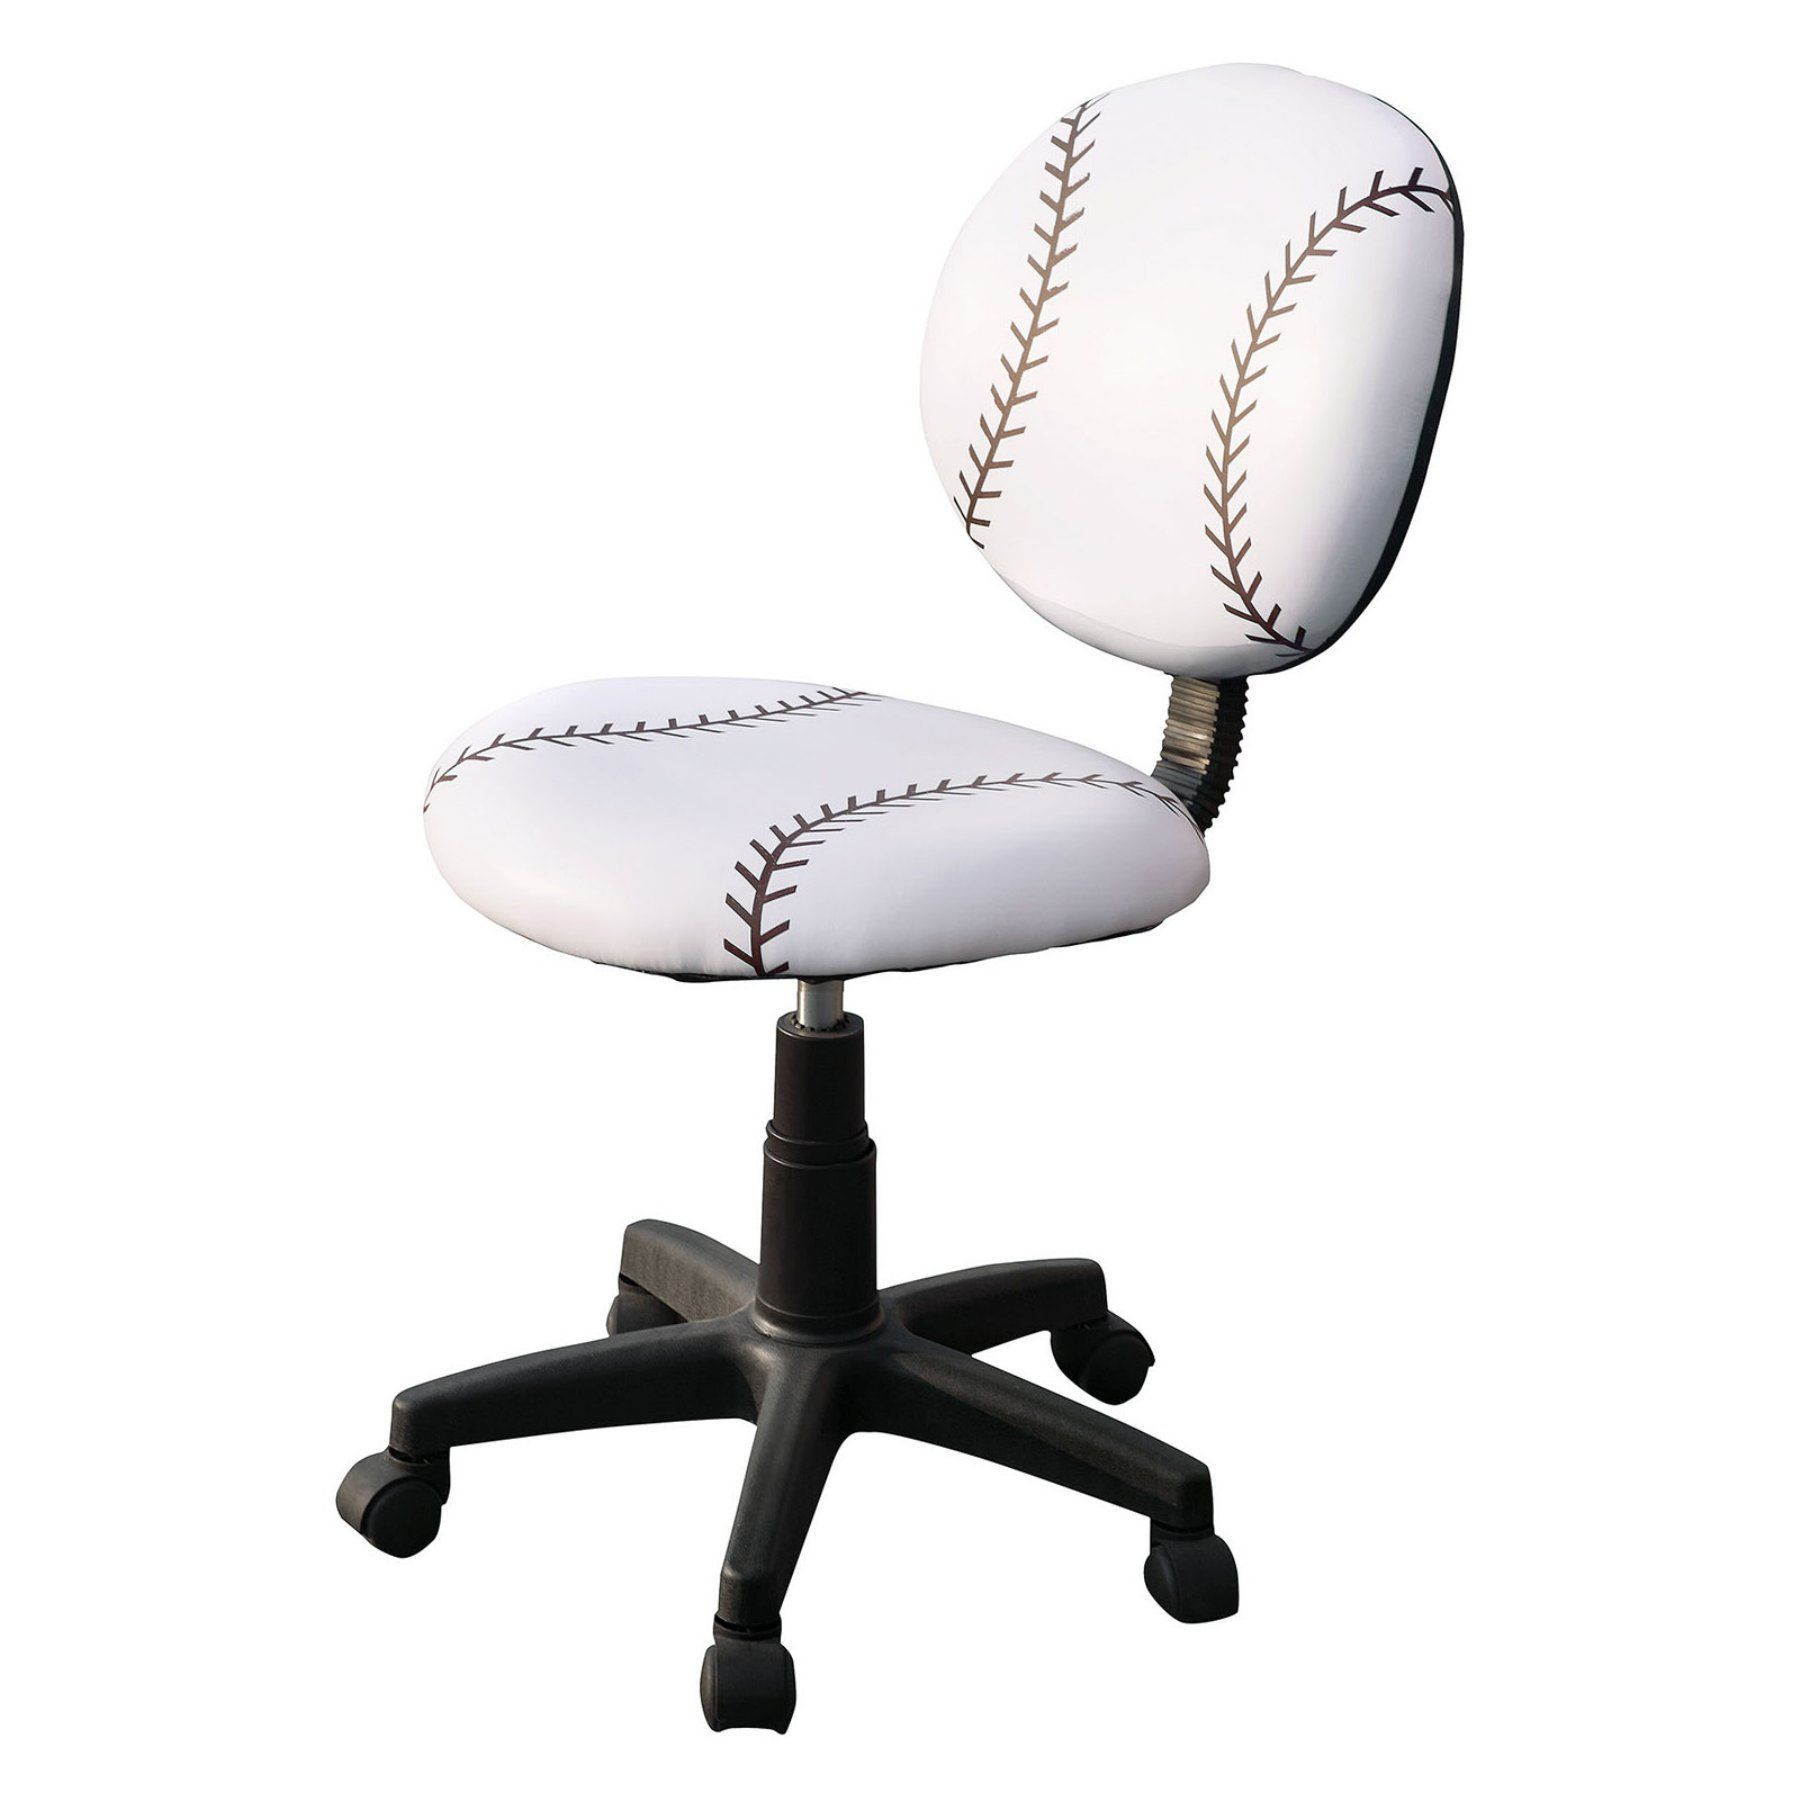 Kids Baseball Chair
 Acme Furniture All Star Youth Baseball Desk Chair